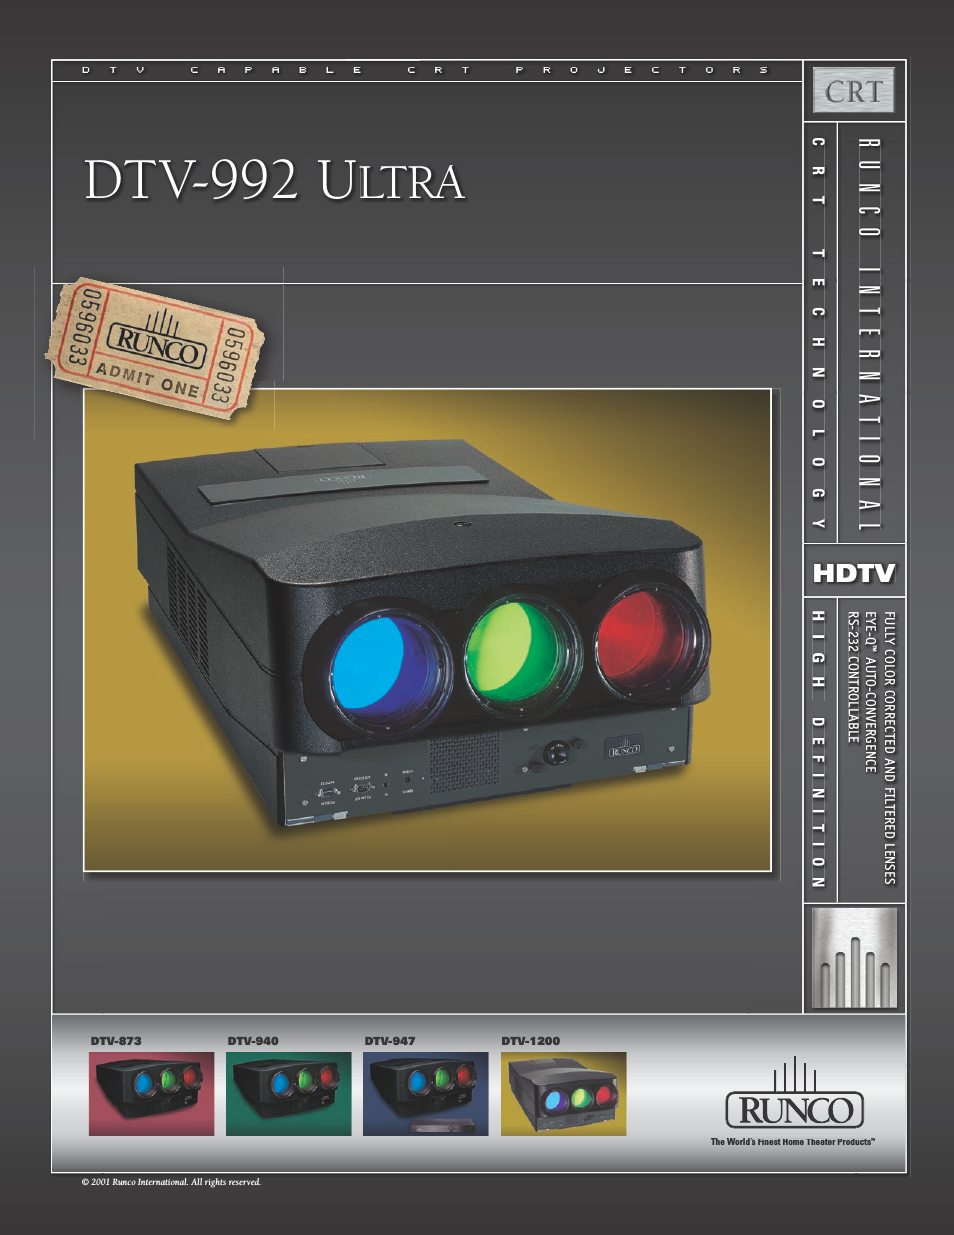 DTV-992 ULTRA